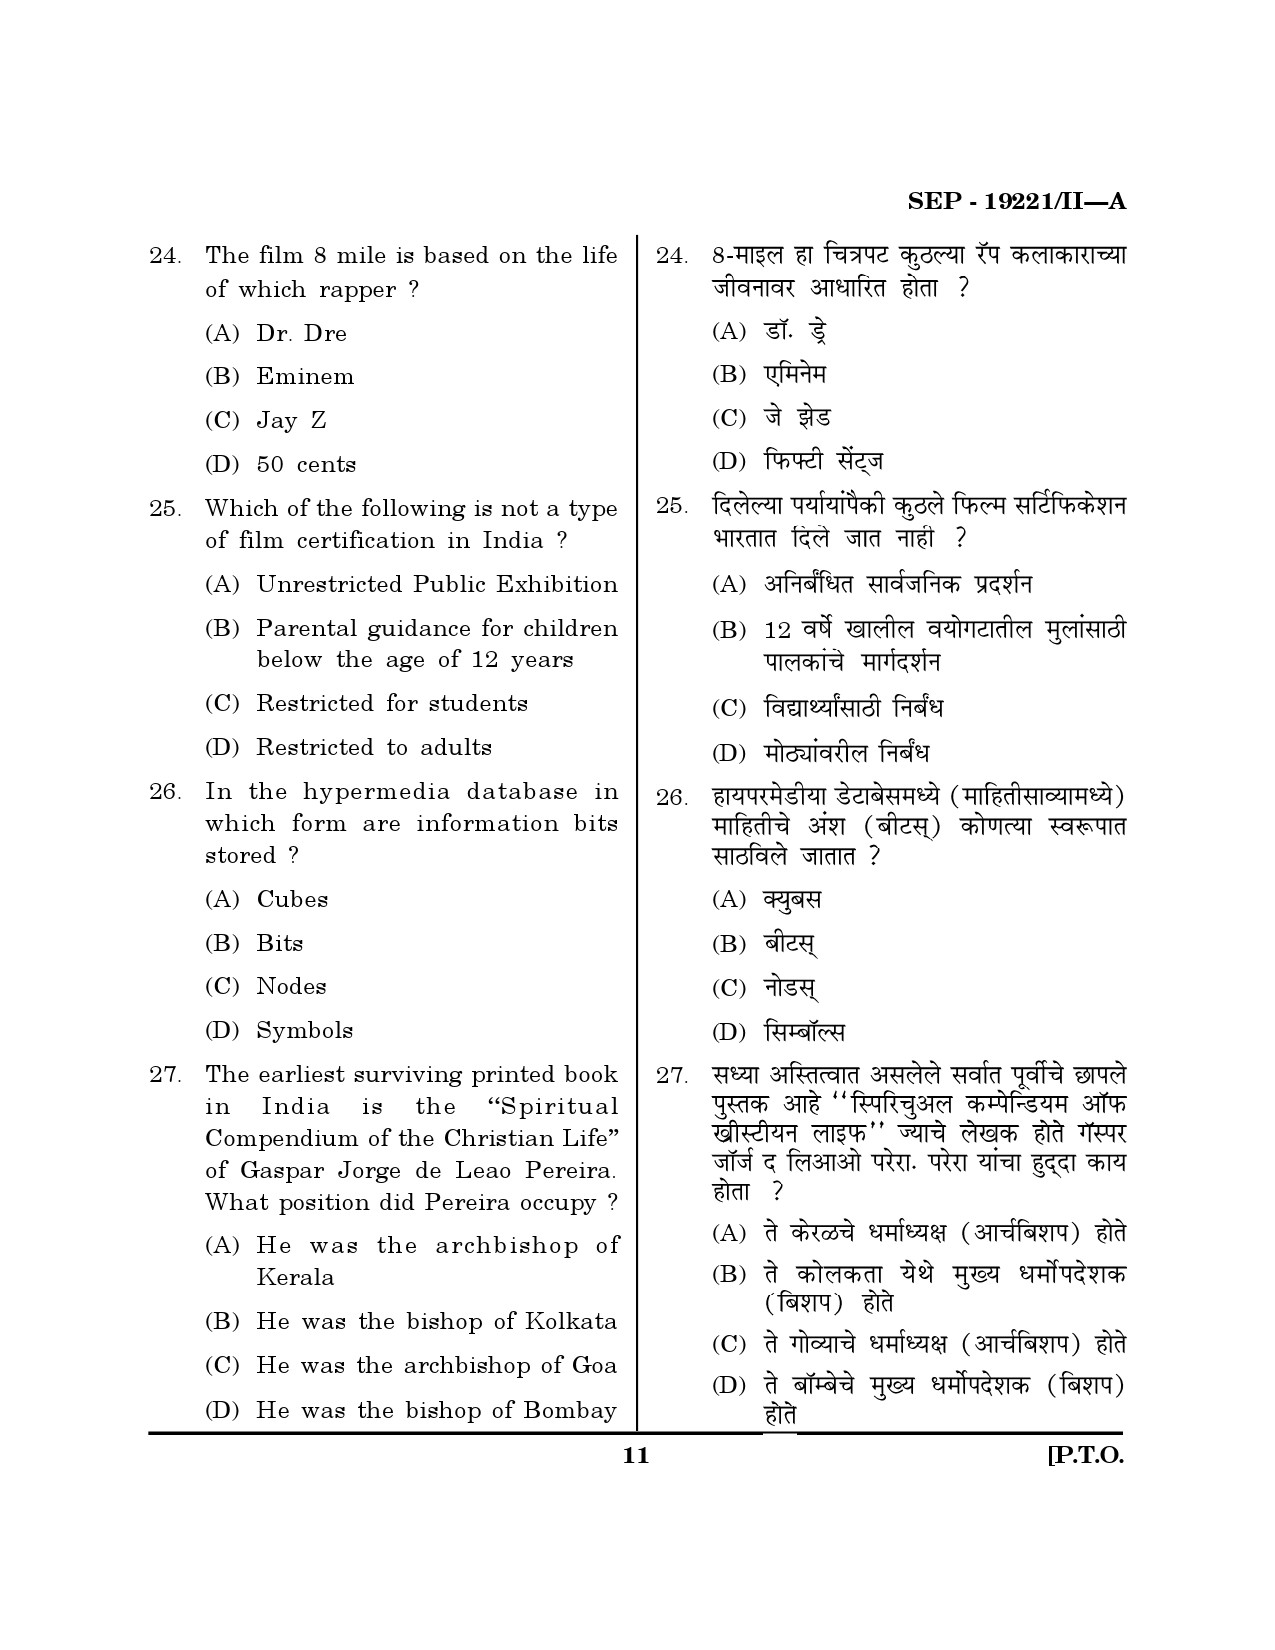 Maharashtra SET Journalism and Mass Communication Exam Question Paper September 2021 10